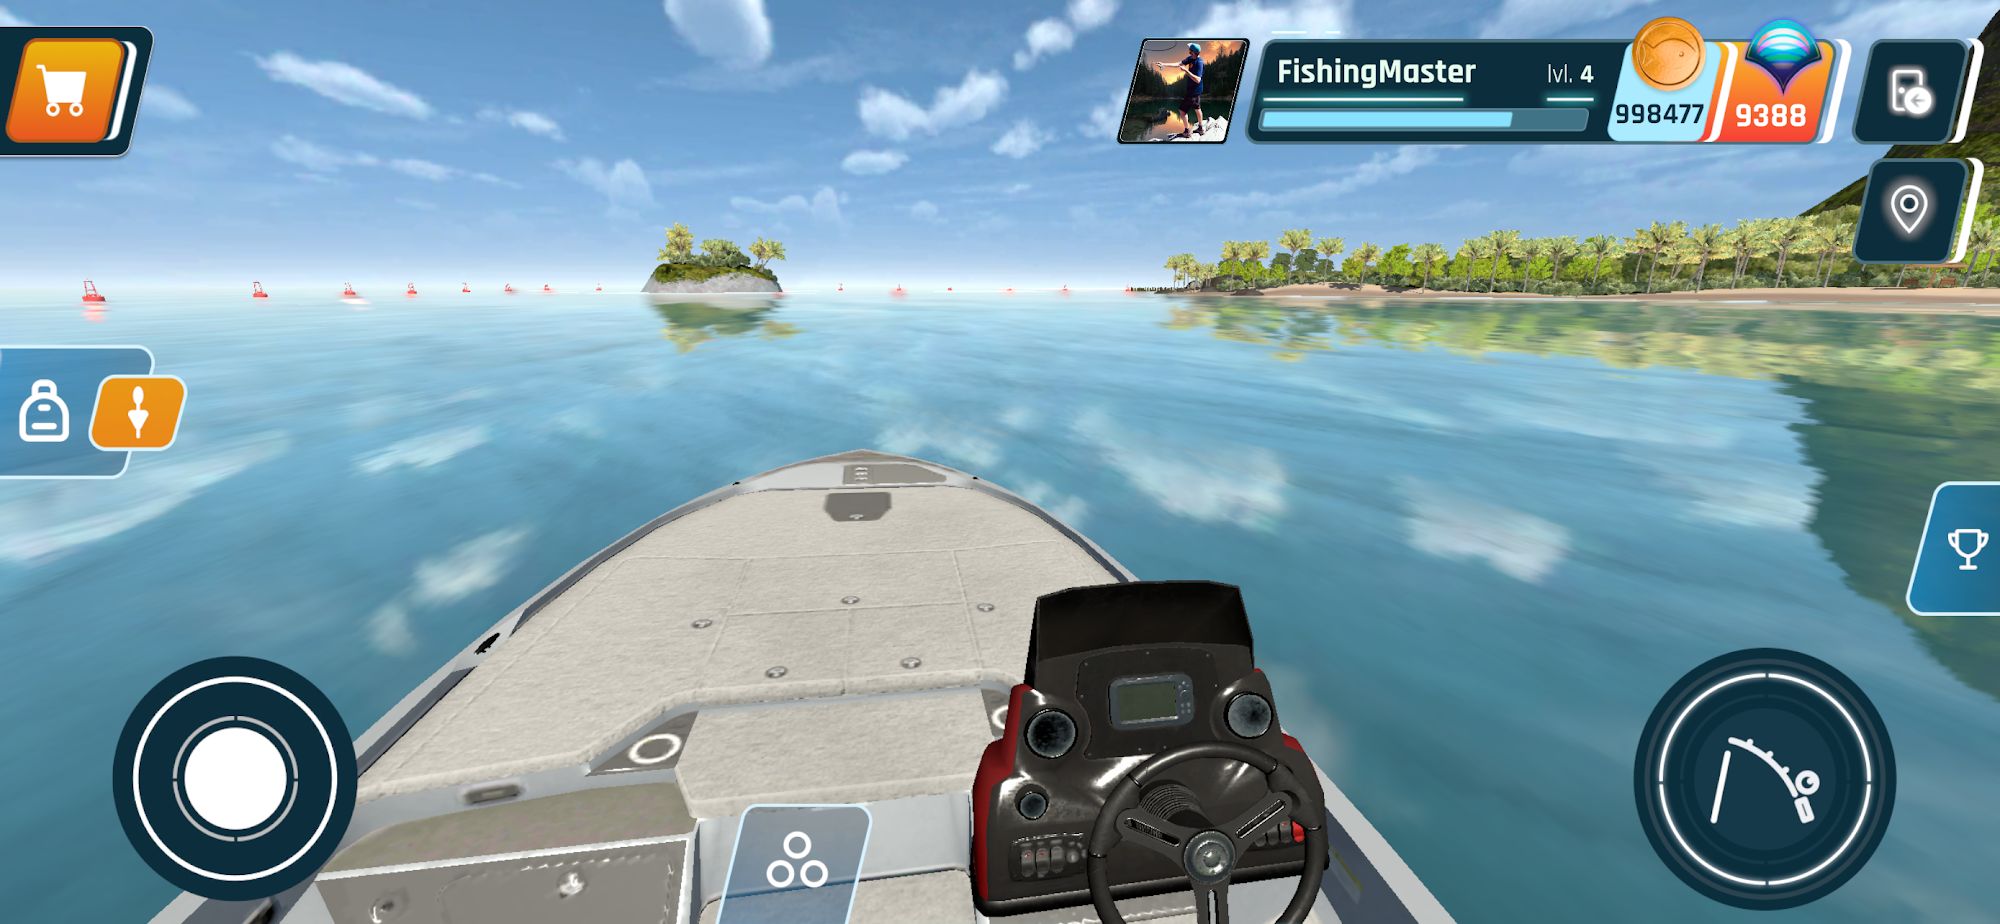 Télécharger Ultimate Fishing Mobile pour Android A.n.d.r.o.i.d. .5...0. .a.n.d. .m.o.r.e gratuit.